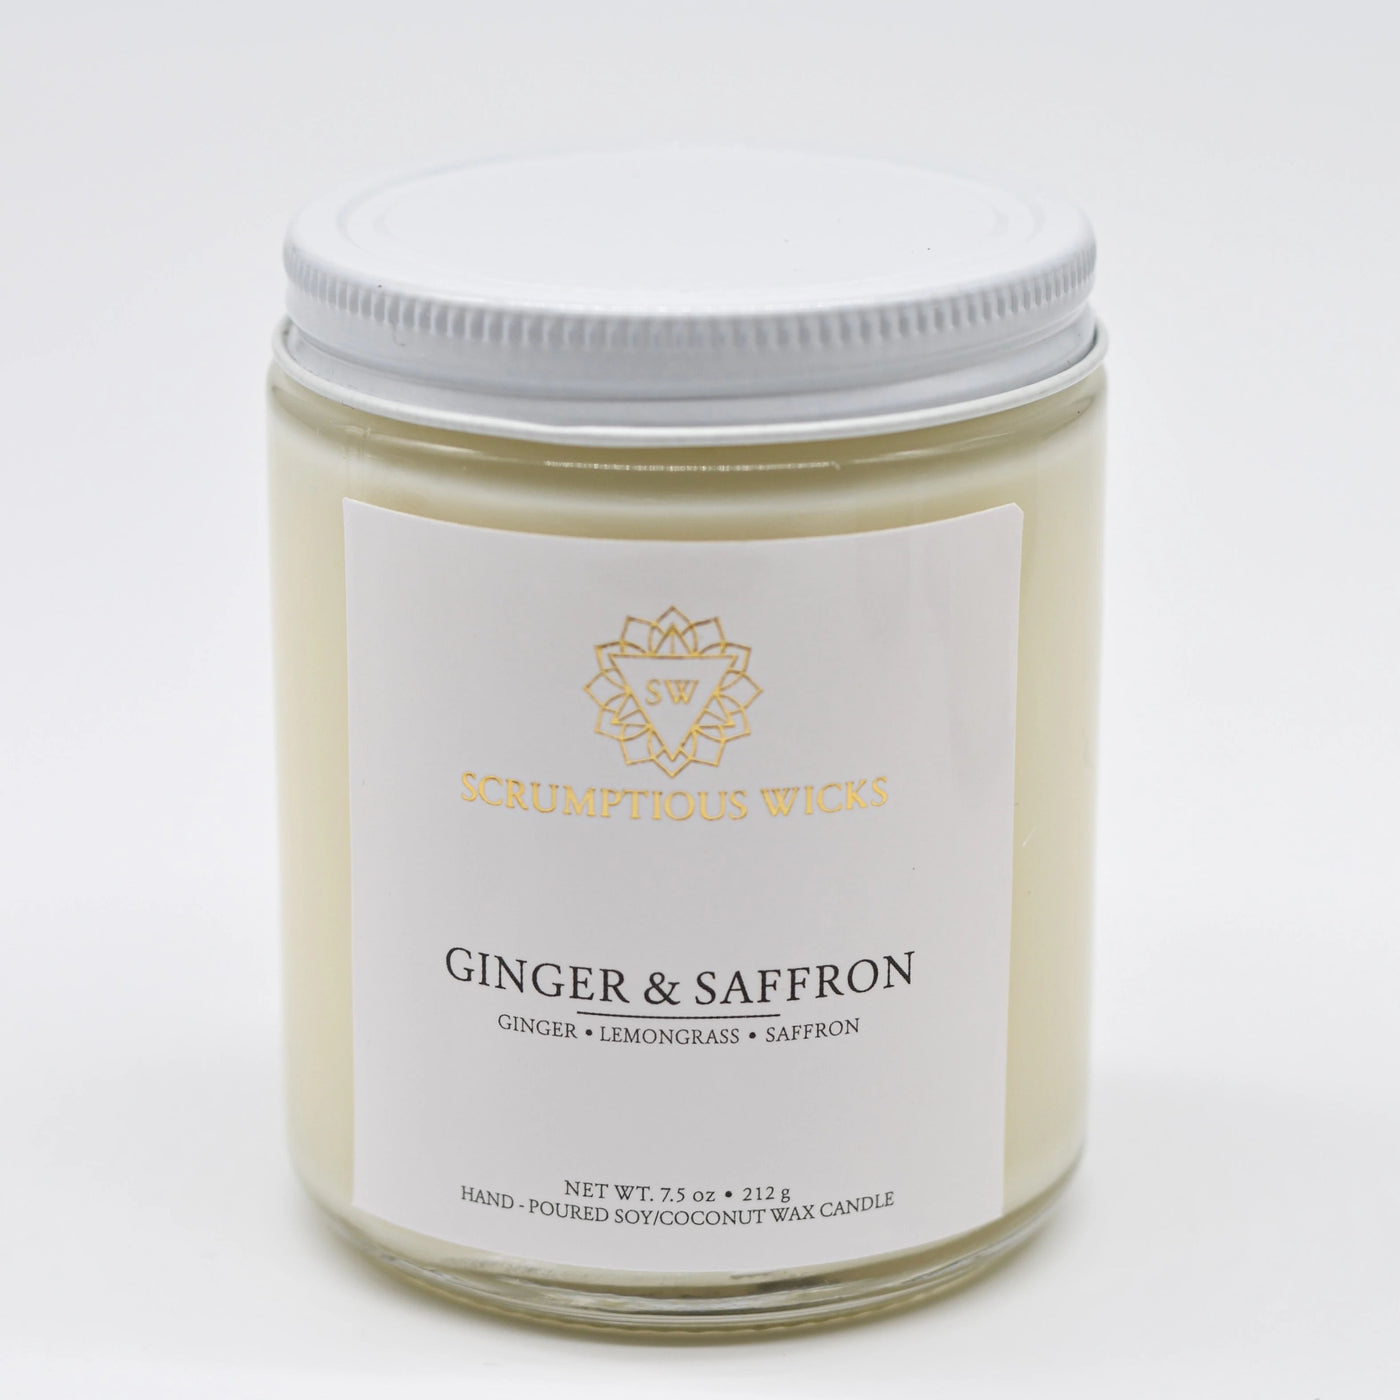 Ginger & Saffron Jar candle by Scrumptious Wicks